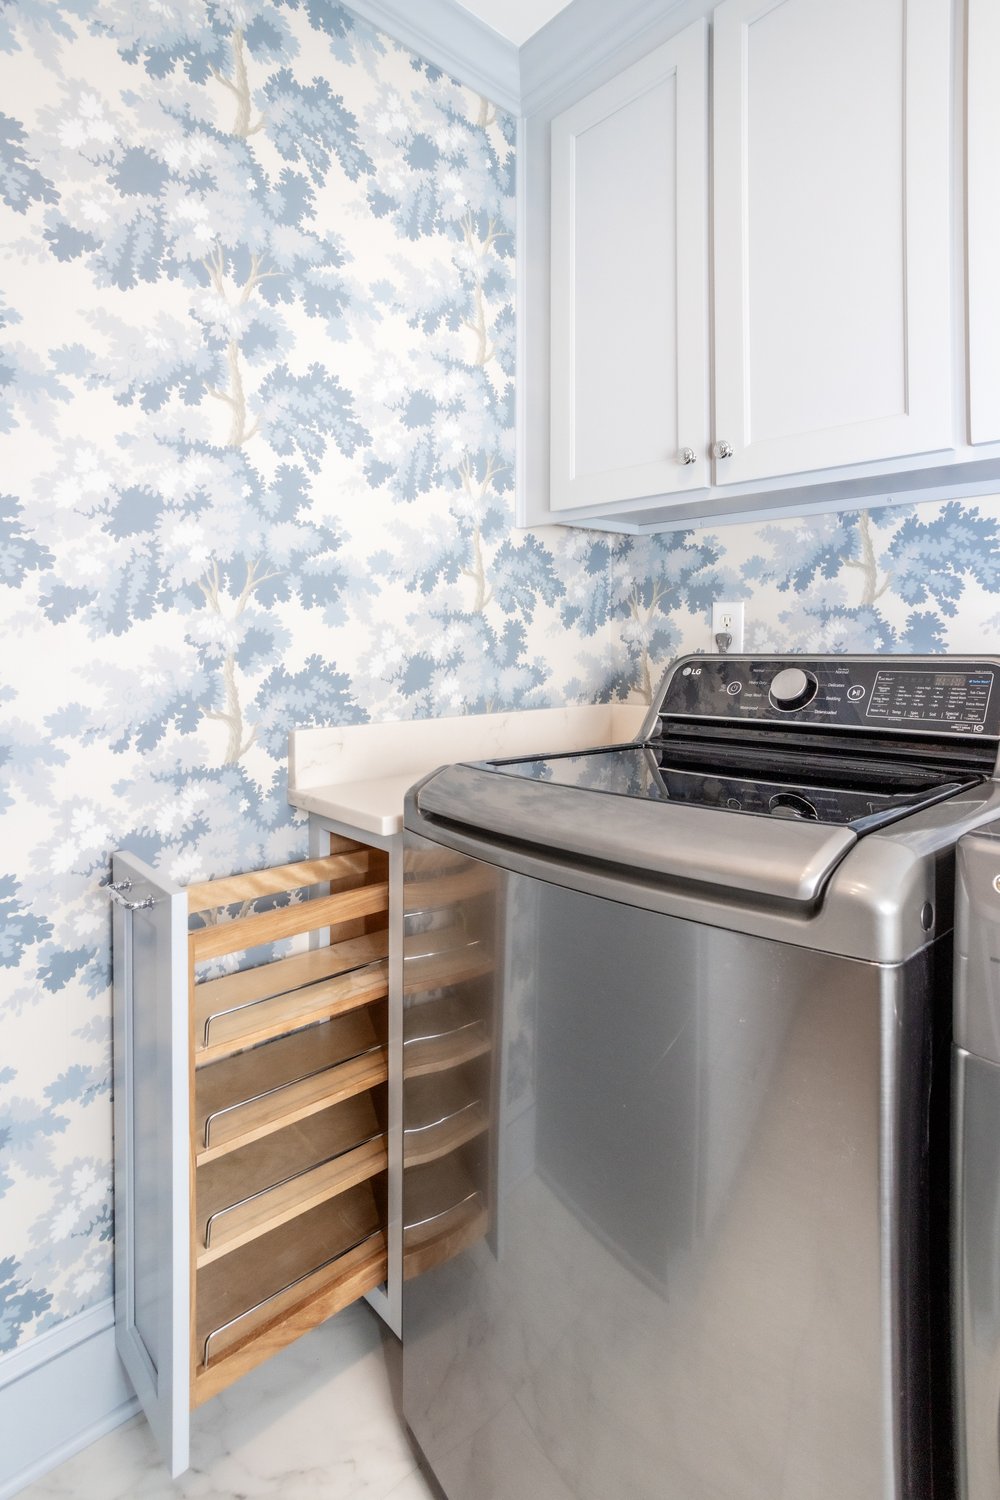 Choosing Wallpaper Over Paint | Laundry Room Design